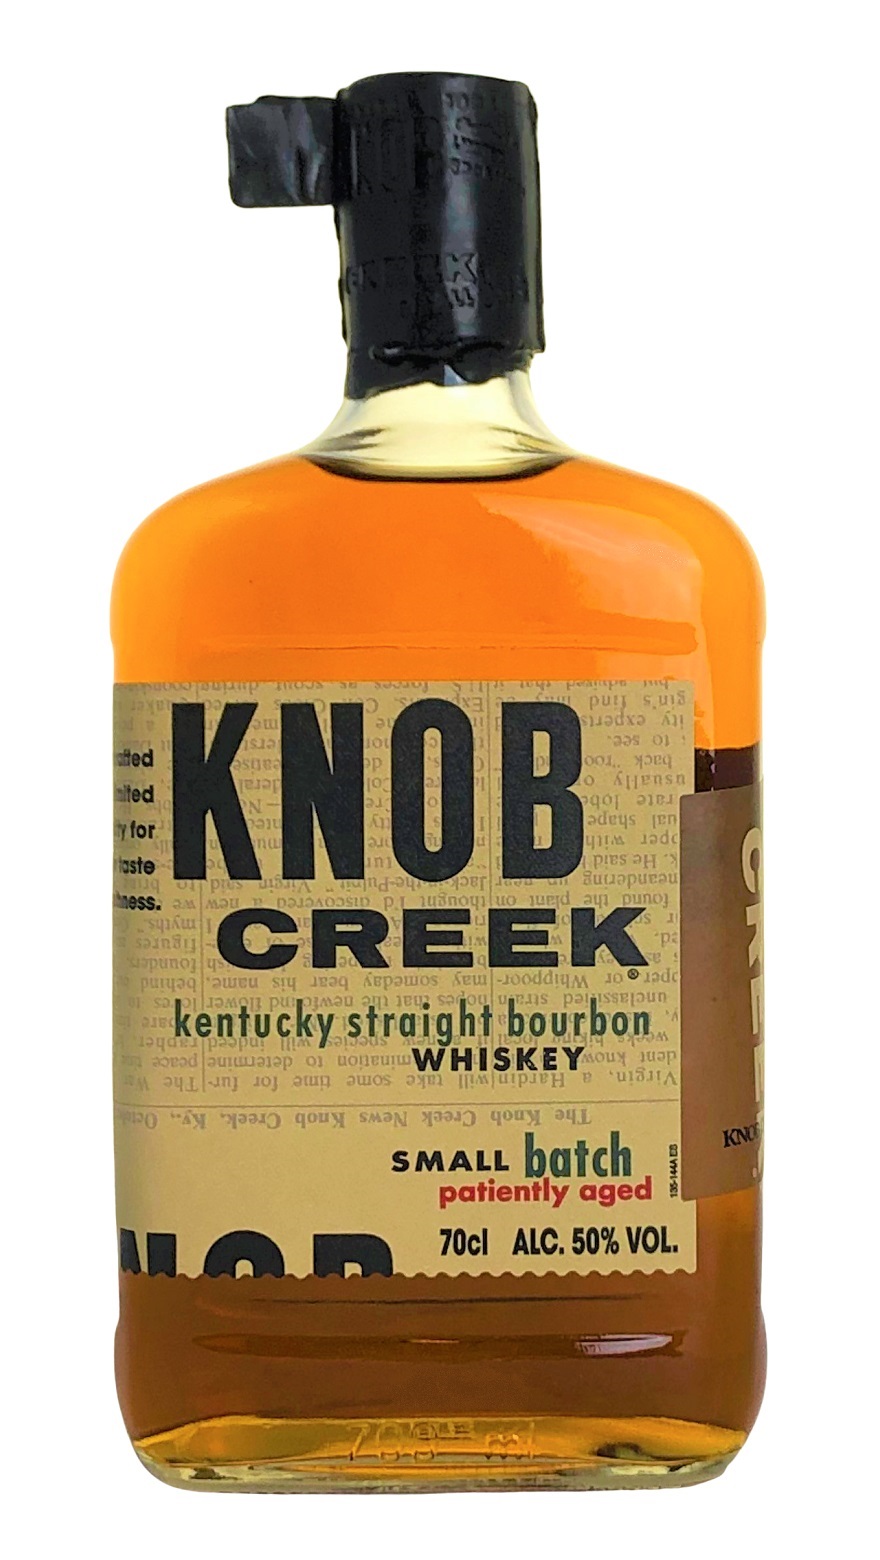 Knob Creek Kentucky Straight Bourbon Whisky